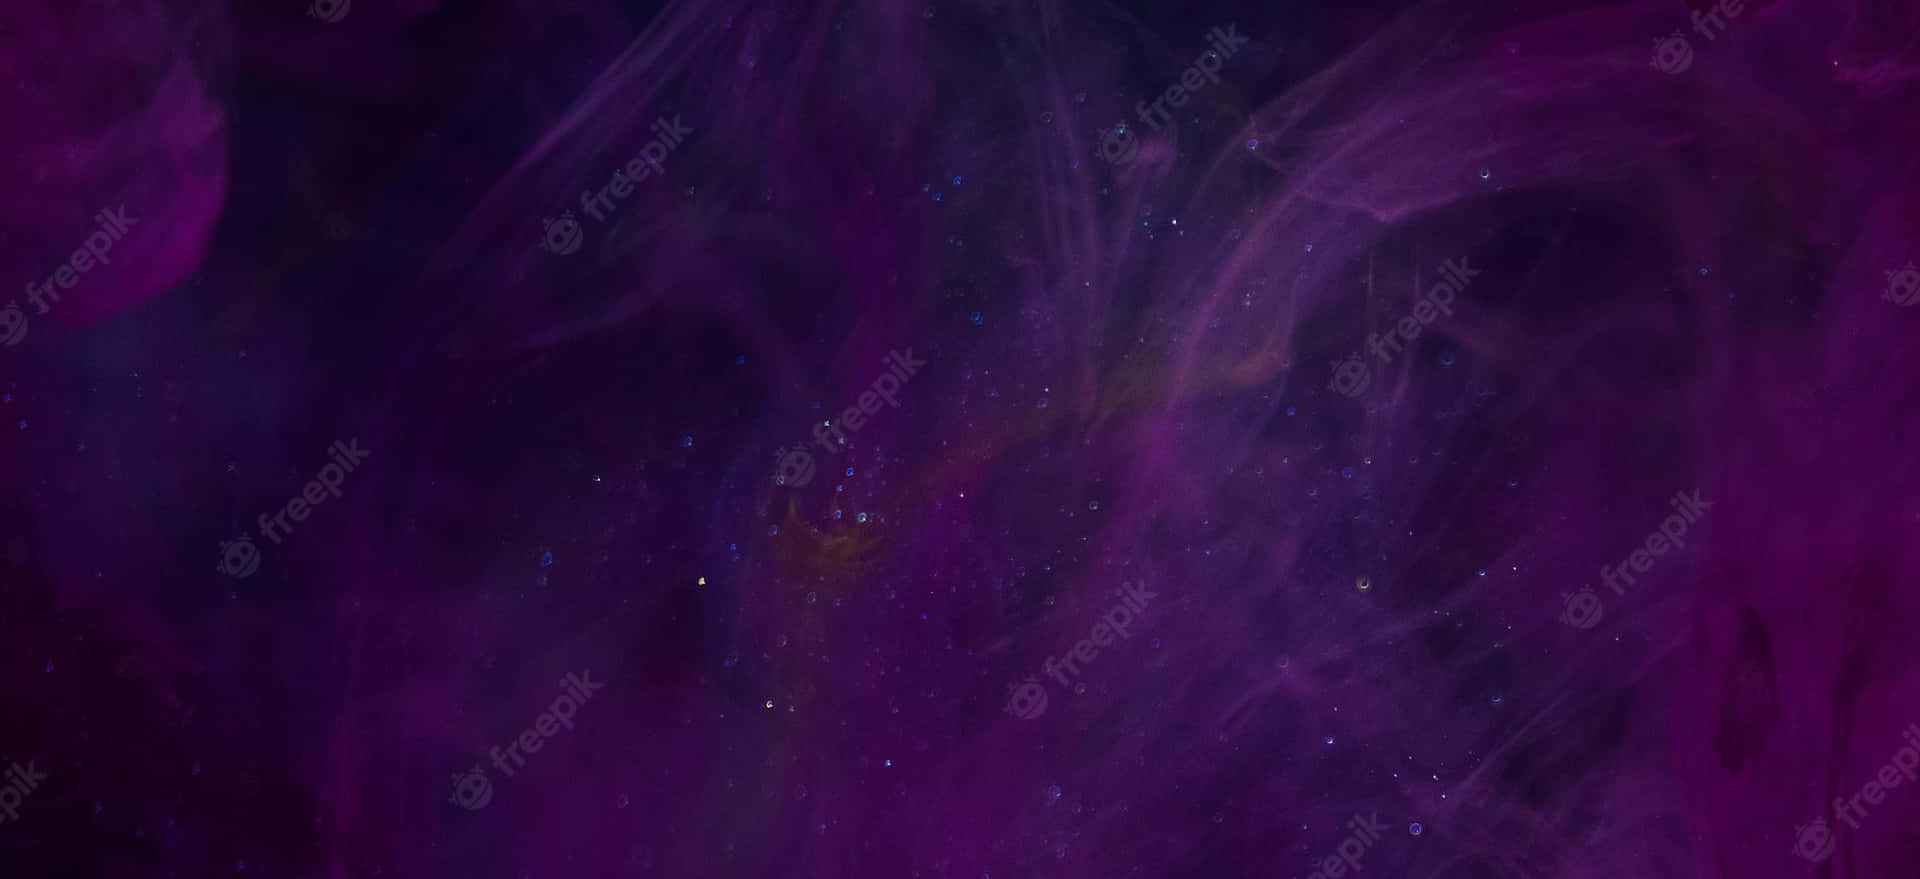 Embrace the Beauty of Purple Grunge Aesthetic Wallpaper